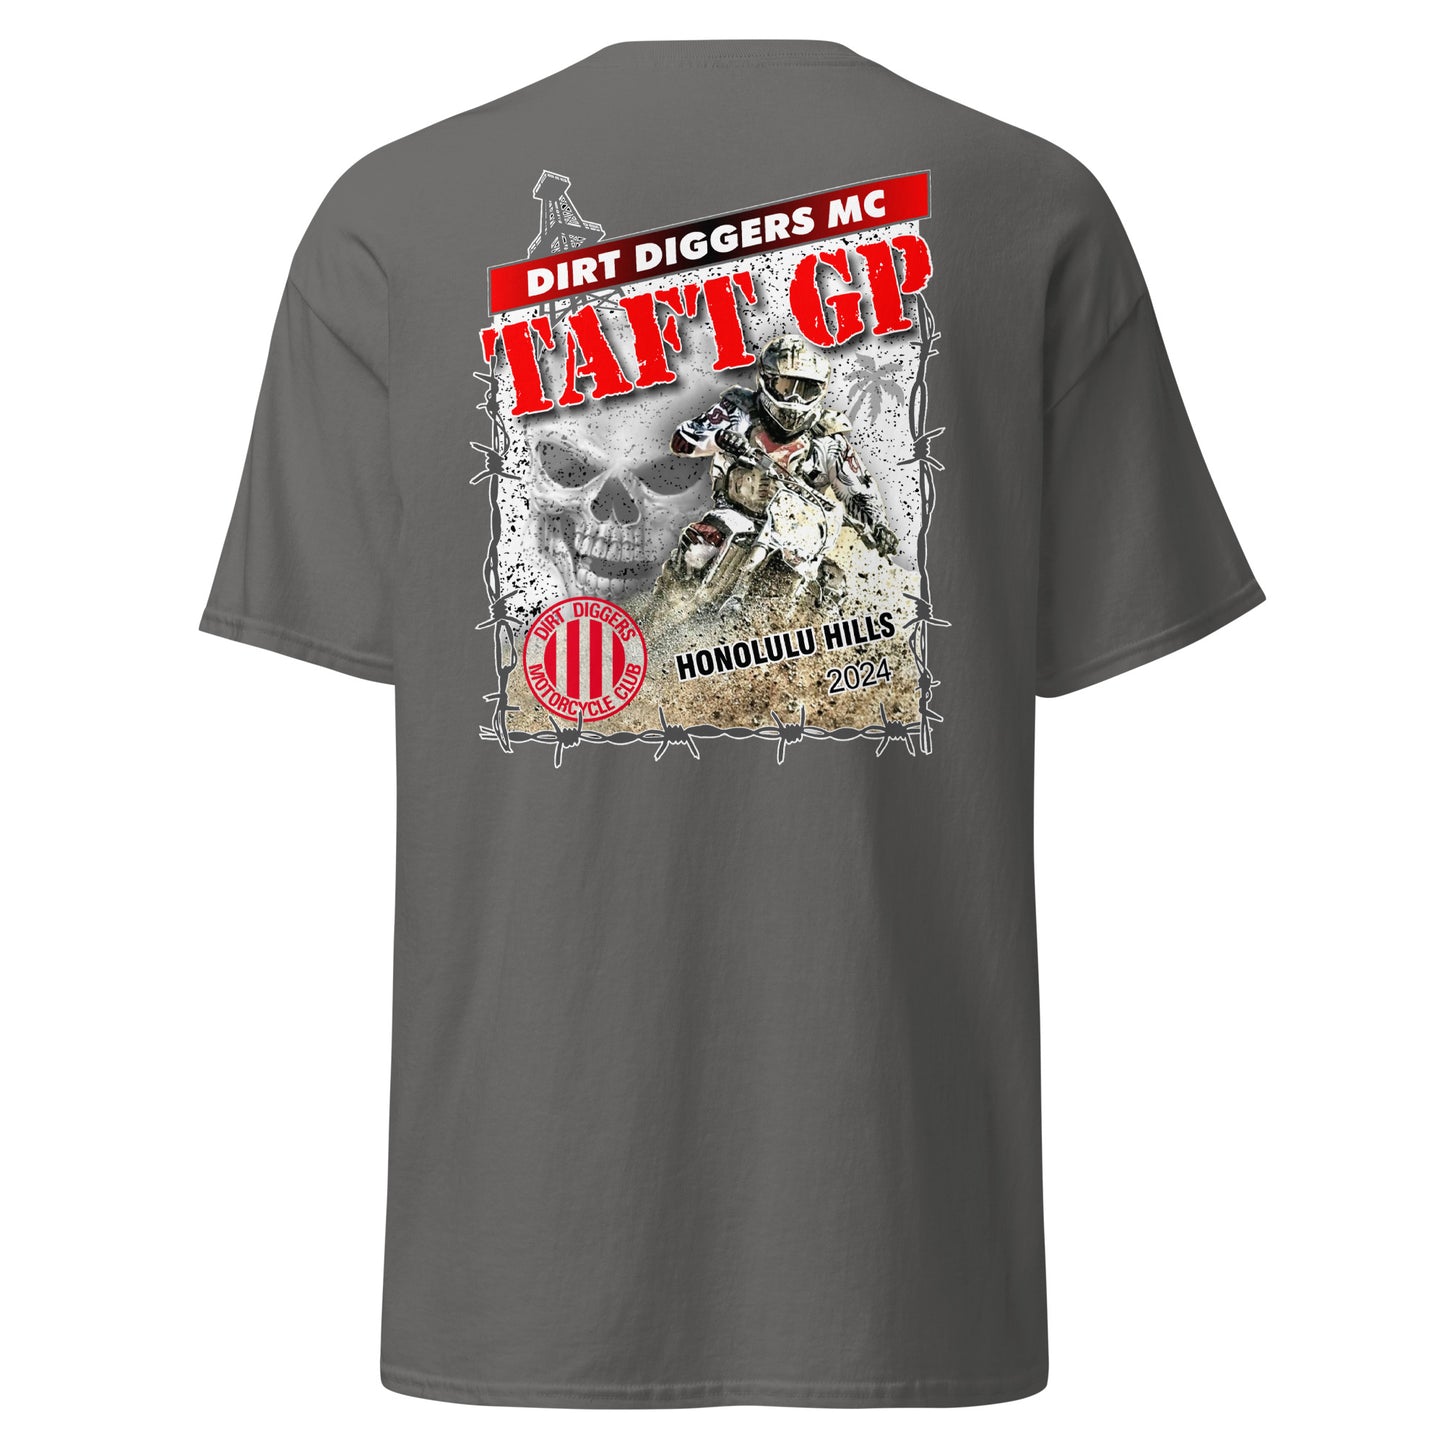 Dirt Diggers 2024 Taft Grand Prix Event Shirt - Adult T-Shirt - District 37 NGPC